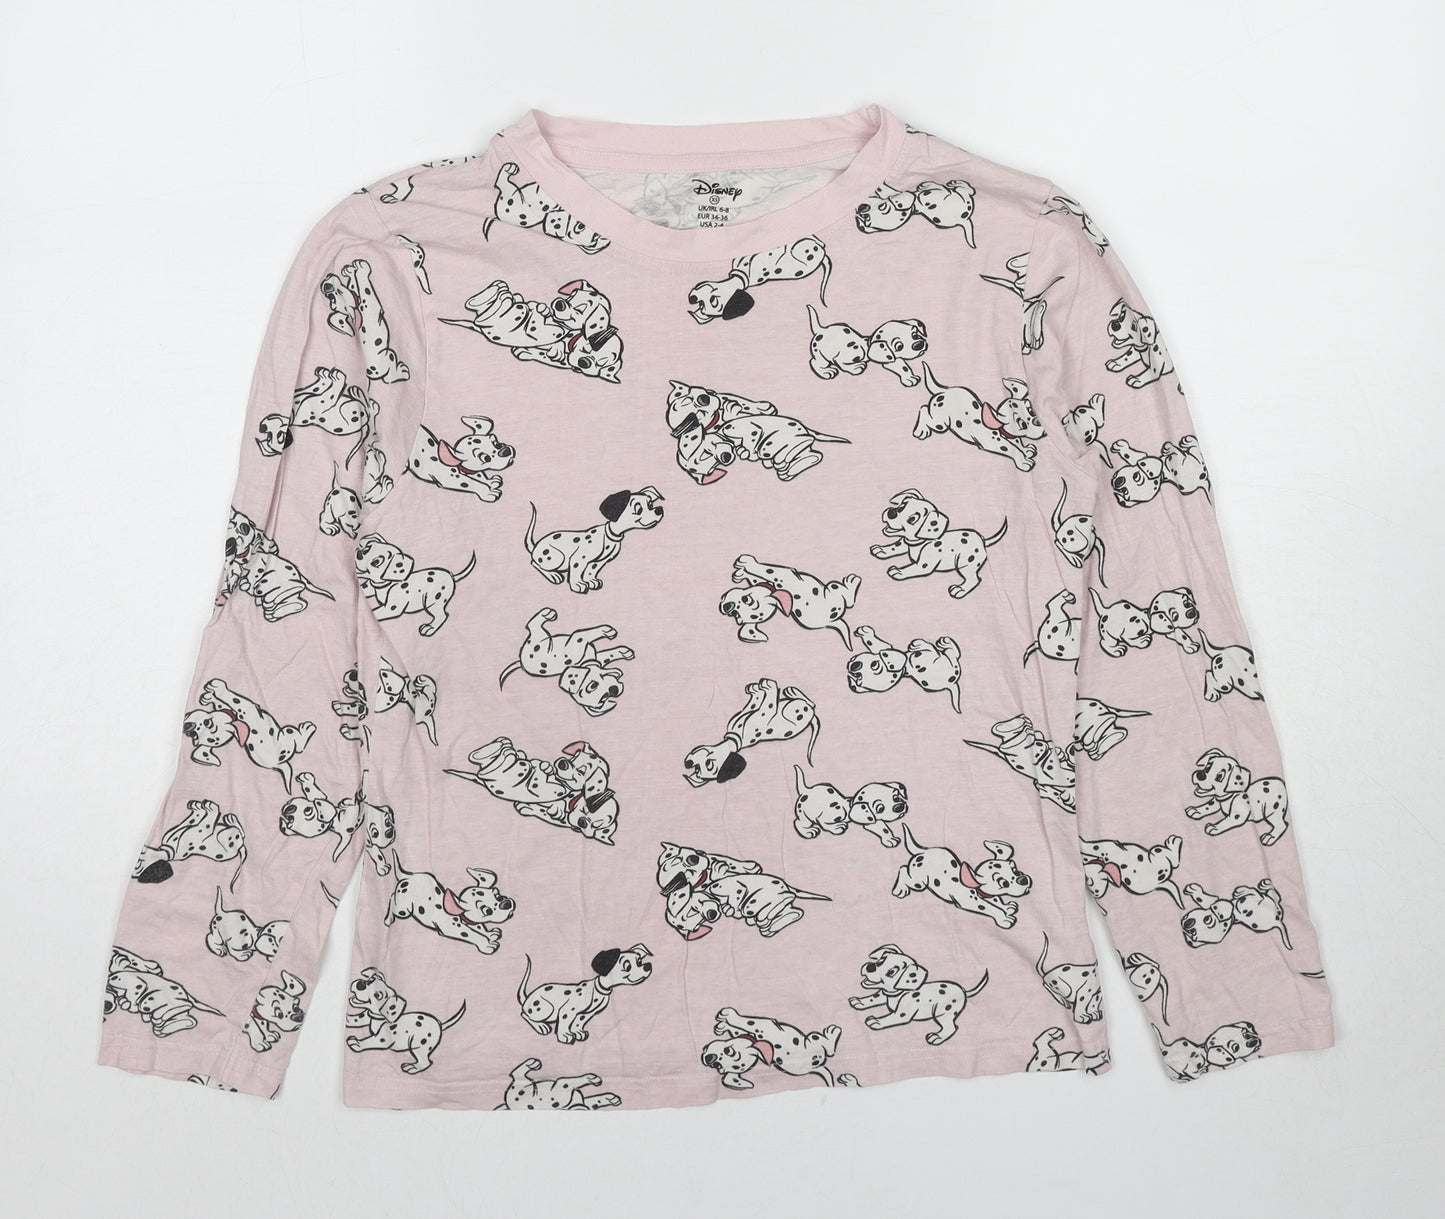 Disney Womens Pink Geometric Cotton Basic T-Shirt Size 6 Crew Neck - 101 Dalmatians